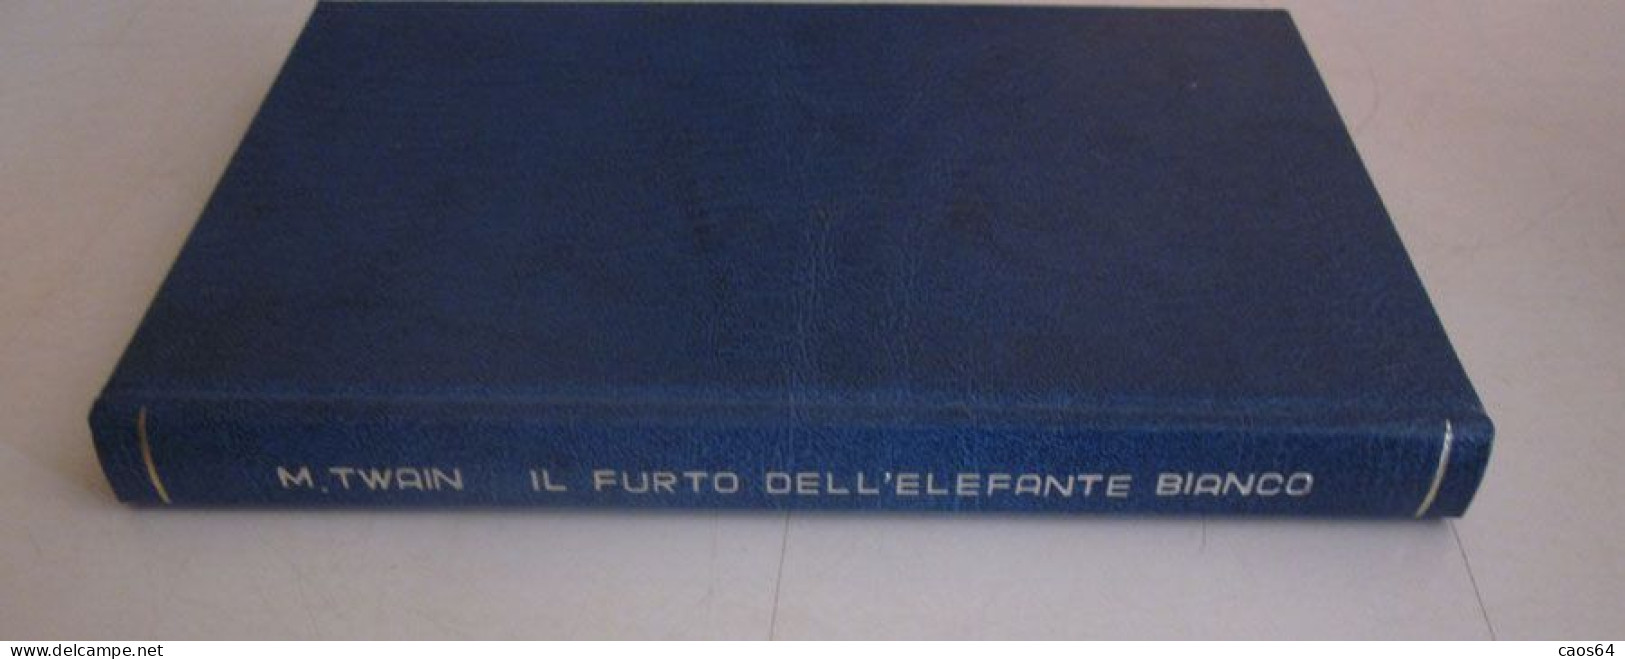 Il Furto Dell'elefante Bianco Mark Twain Rizzoli BUR 1952 - Klassiekers